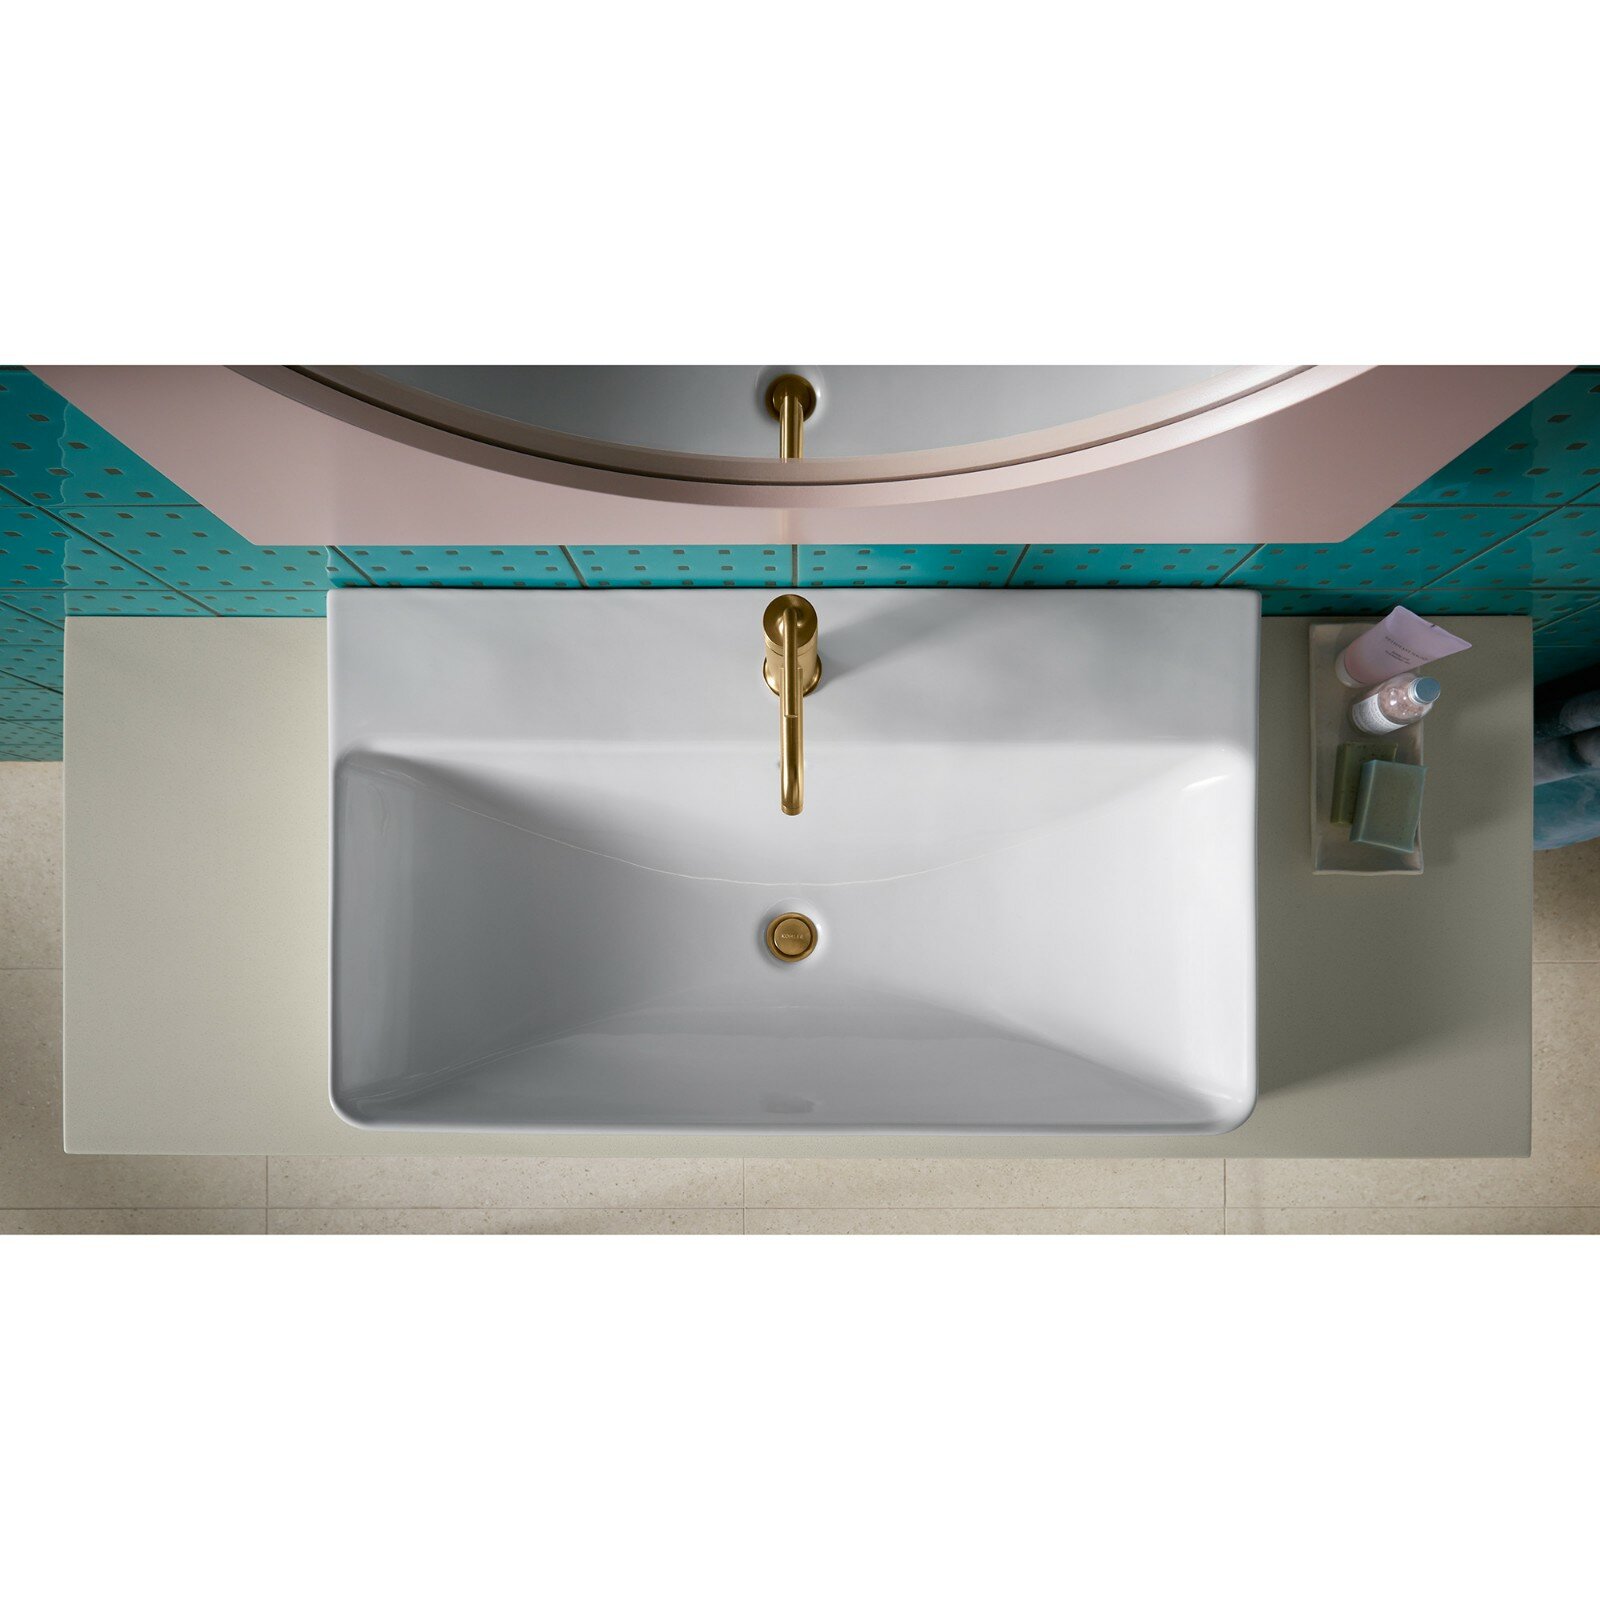 K 2749 1 0 Kohler Vox Vitreous China Rectangular Vessel Bathroom Sink With Overflow Reviews Wayfair